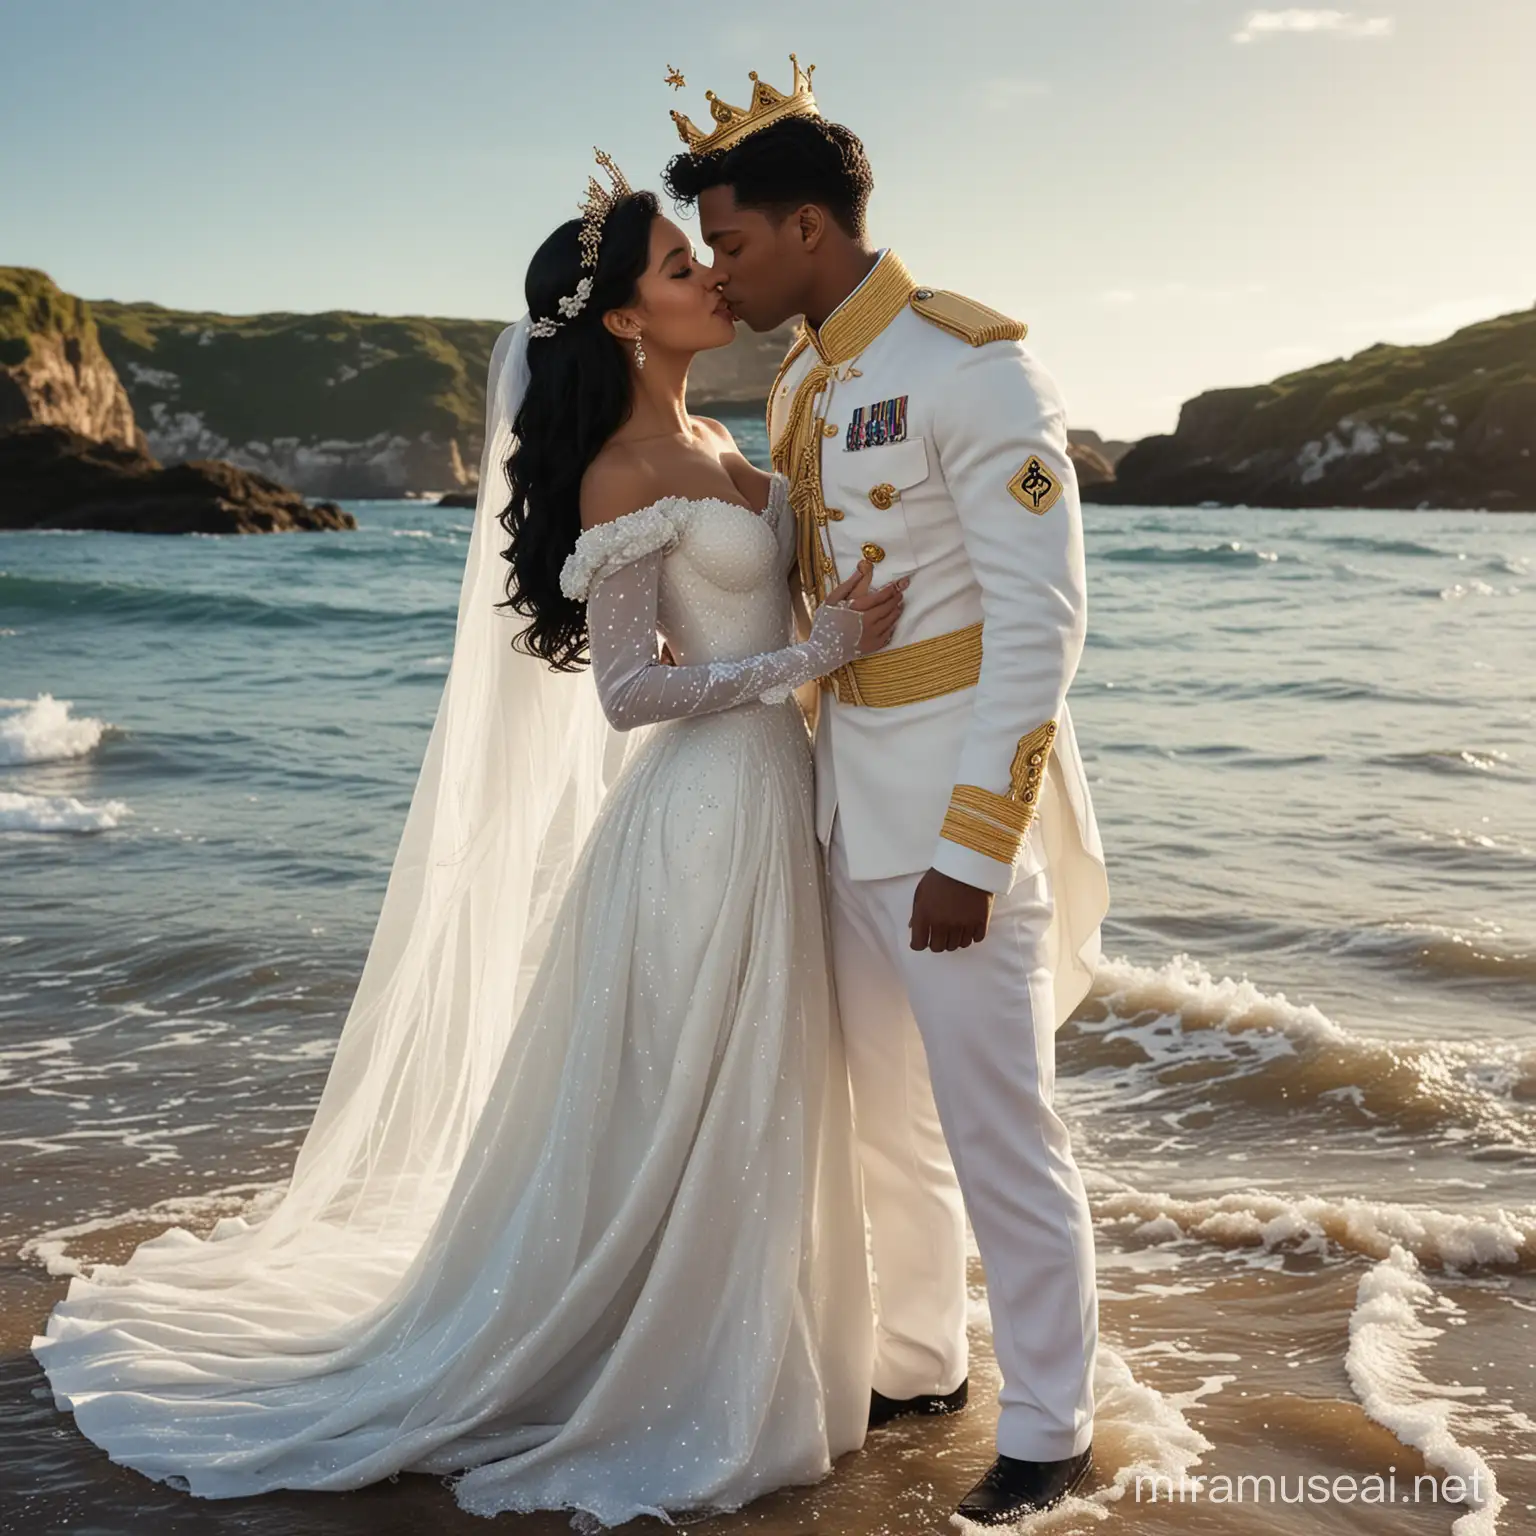 Romantic Beach Kiss Prince Elijah and Princess Ariel Embrace by the Sea